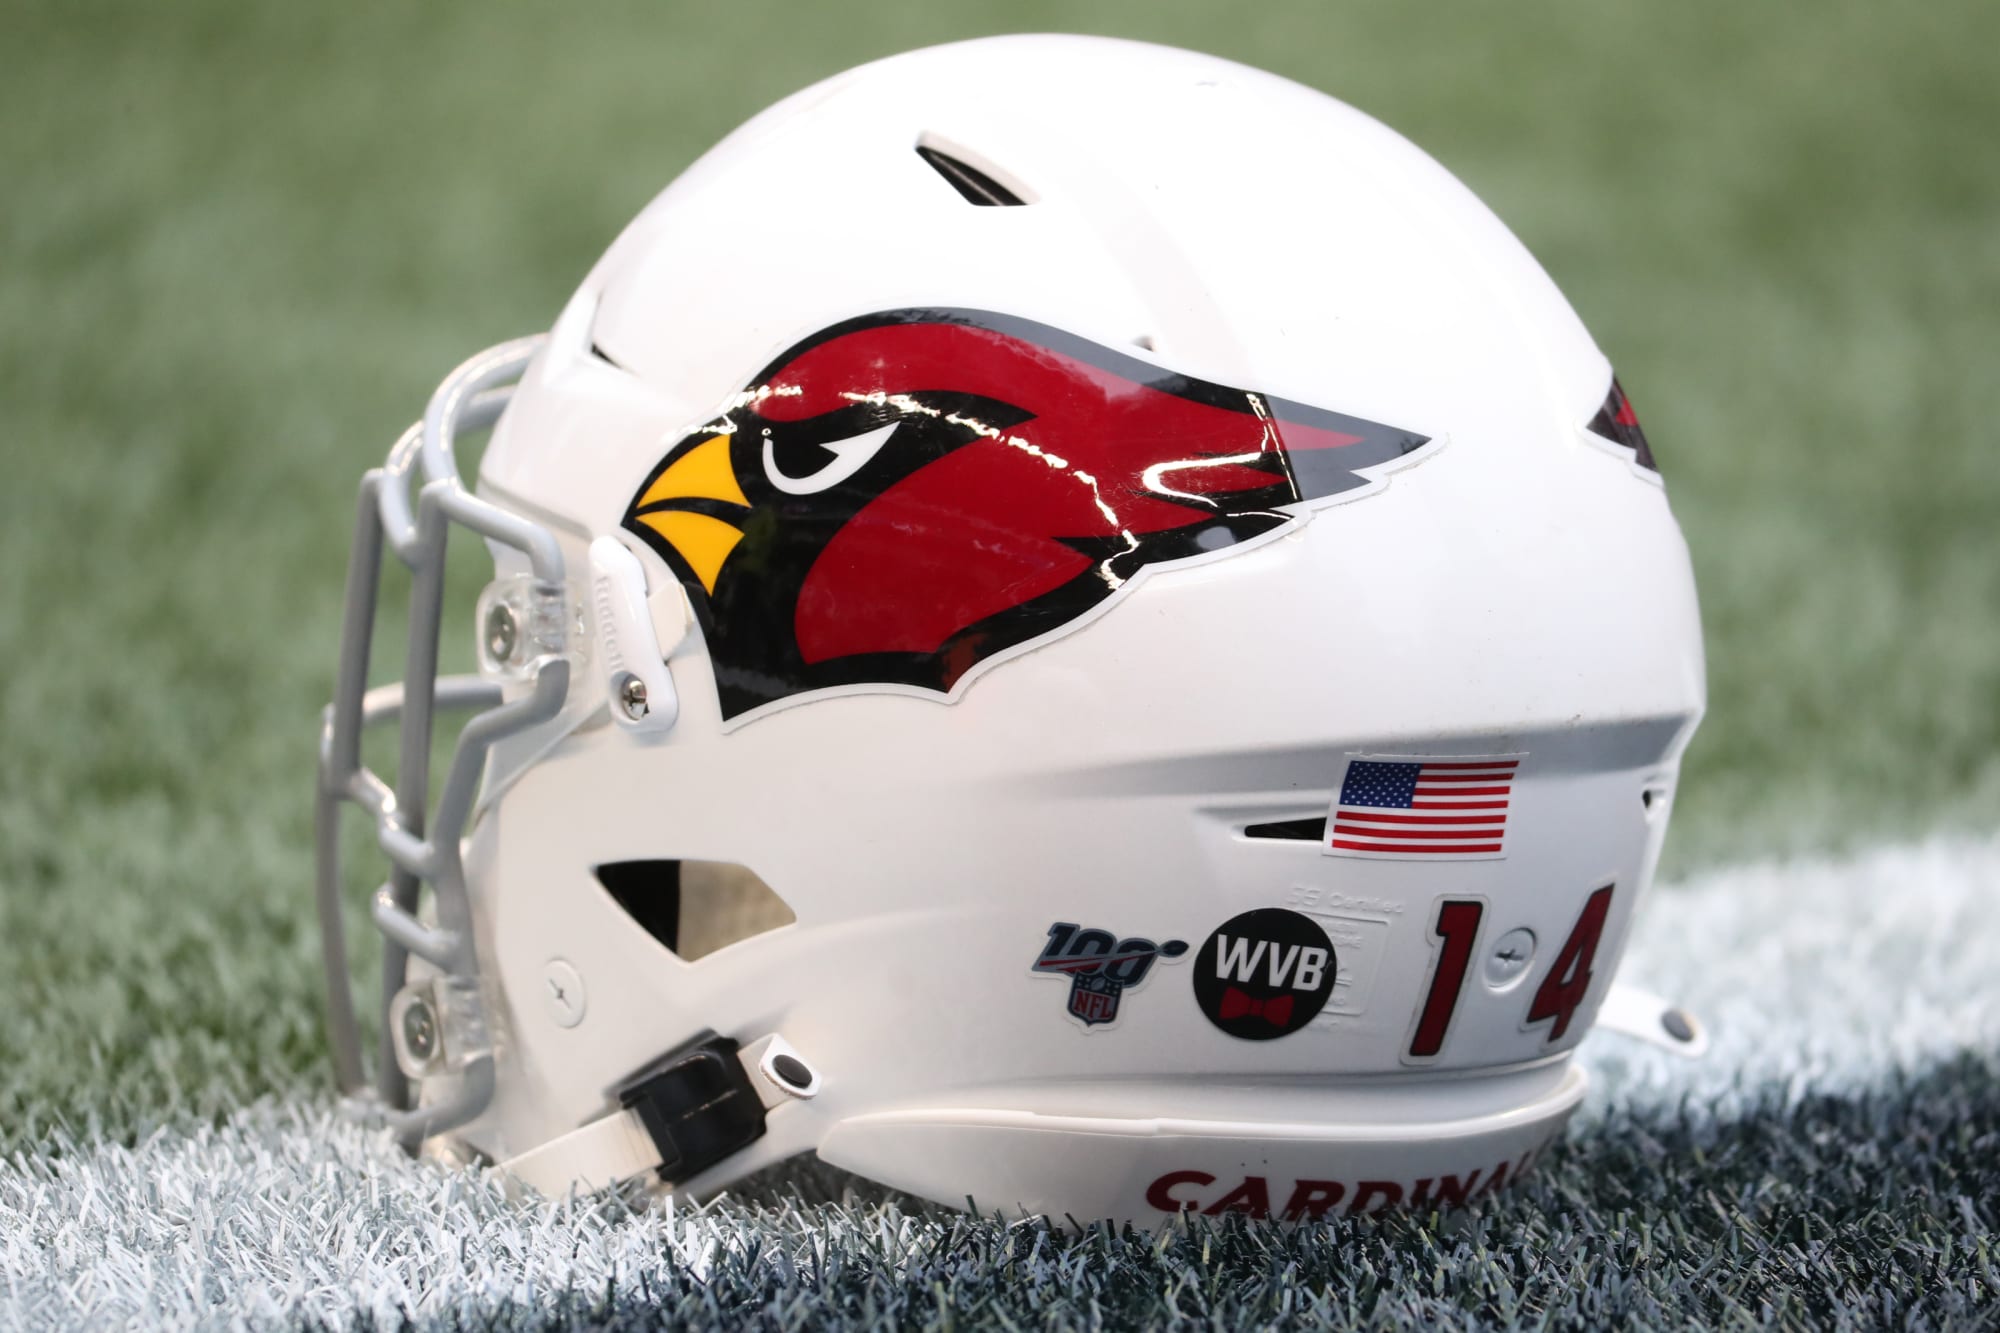 az cardinals new uniforms 2020